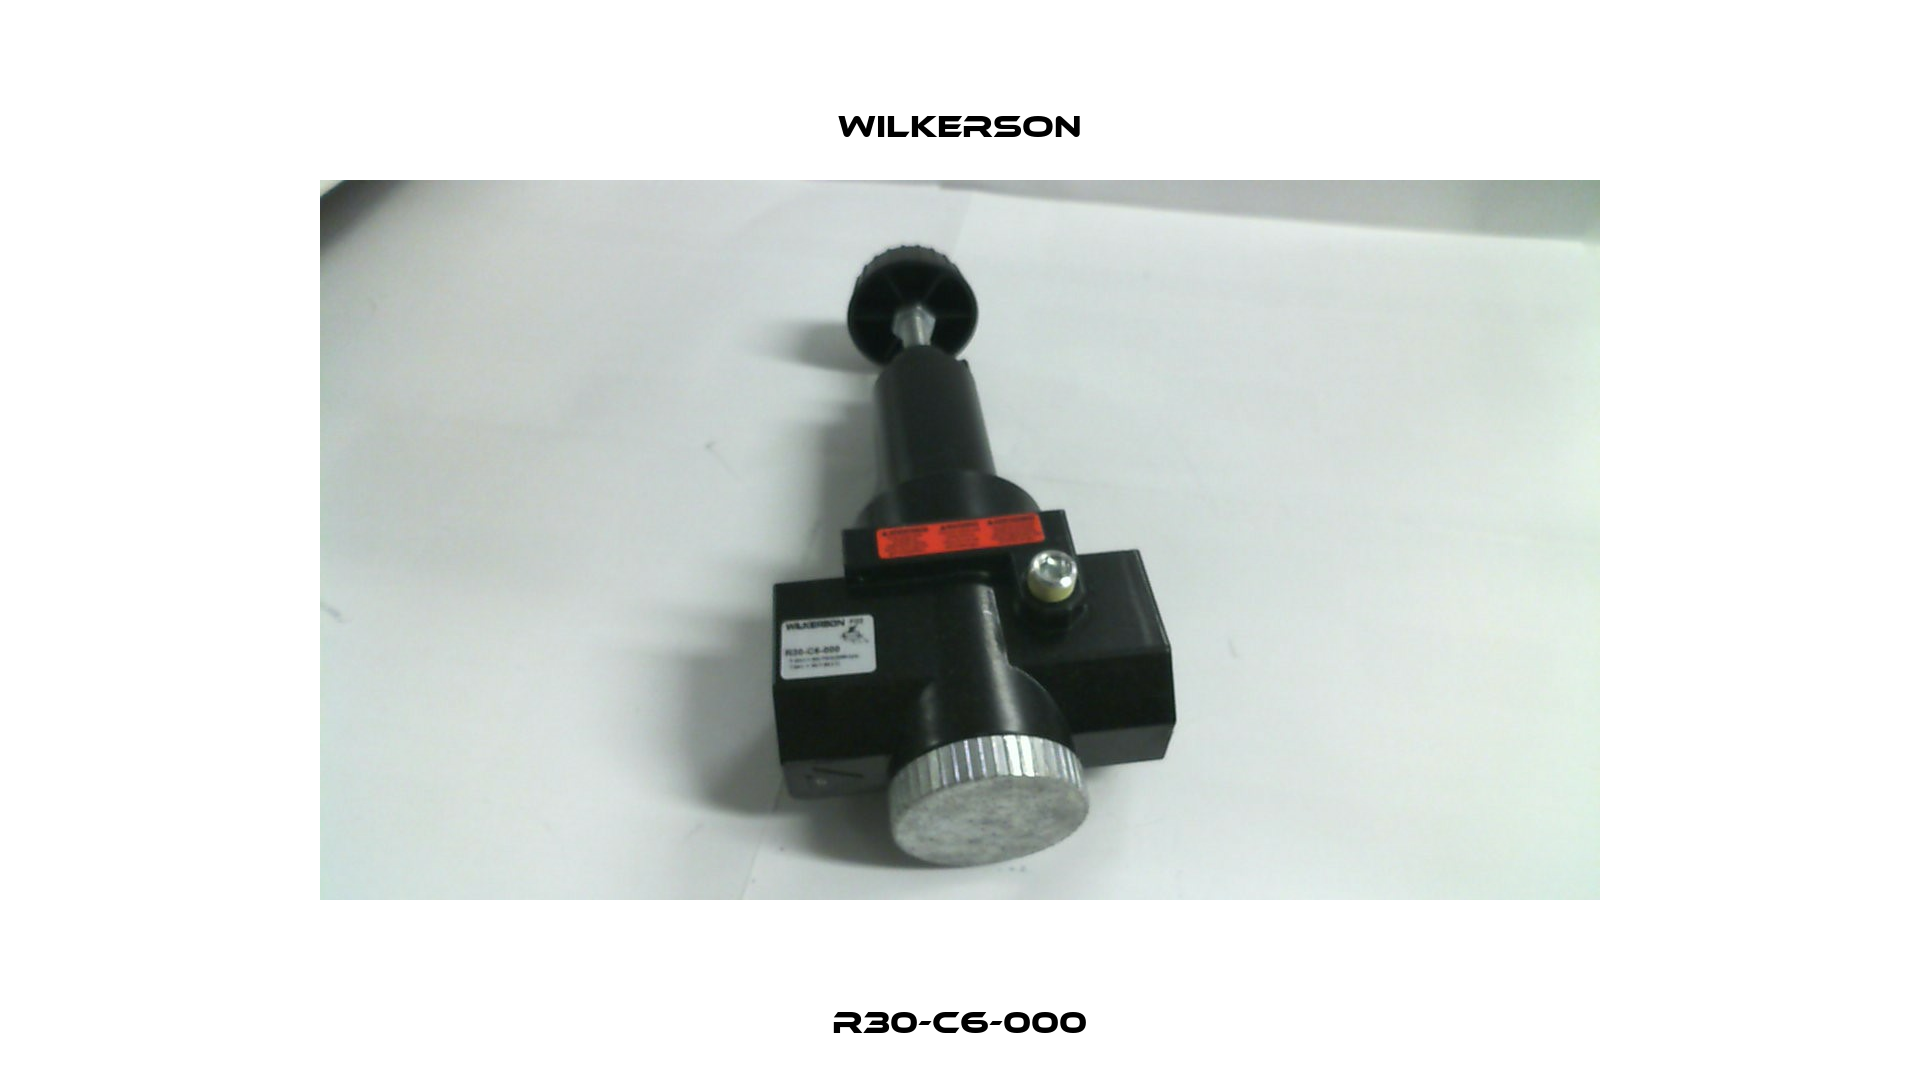 R30-C6-000 Wilkerson